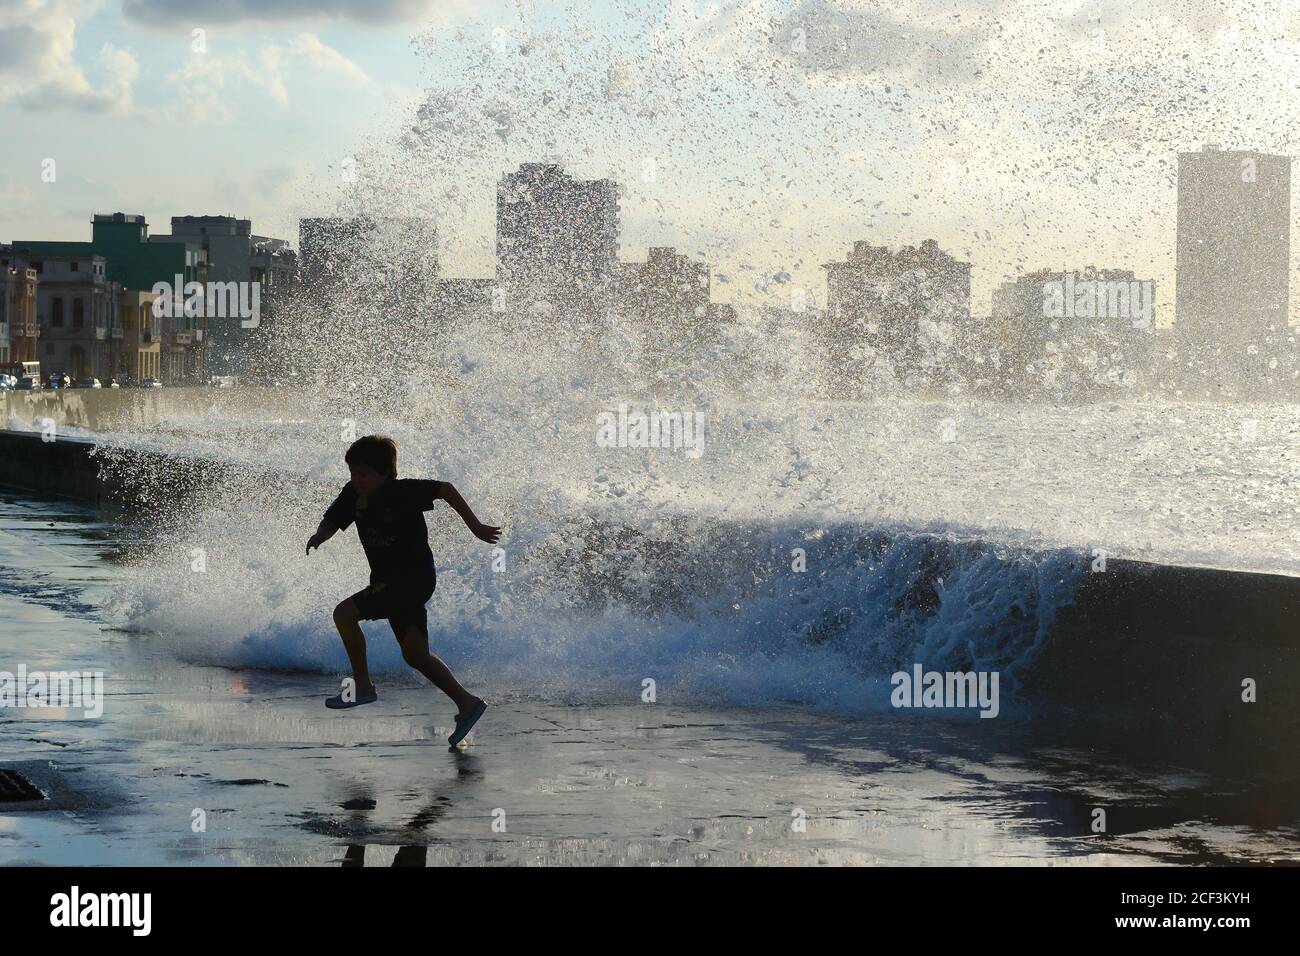 Cuban kid running from huge wave splash that hit the seawall in El Malecon, Havana, Cuba. Agitated sea hitting La Habana. Children having fun. Stock Photo